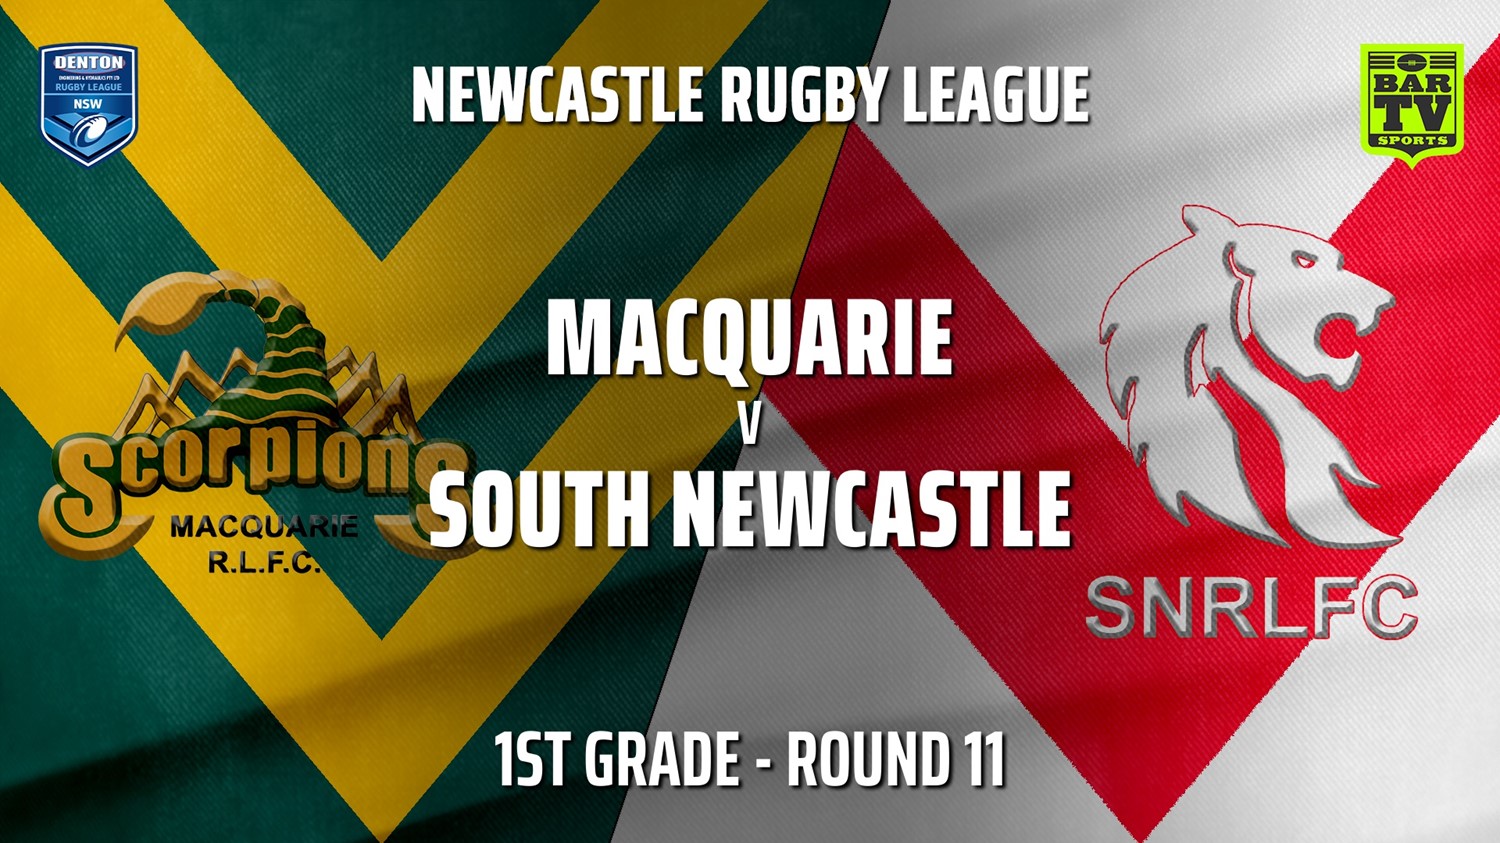 210612-Newcastle Round 11 - 1st Grade - Macquarie Scorpions v South Newcastle Slate Image